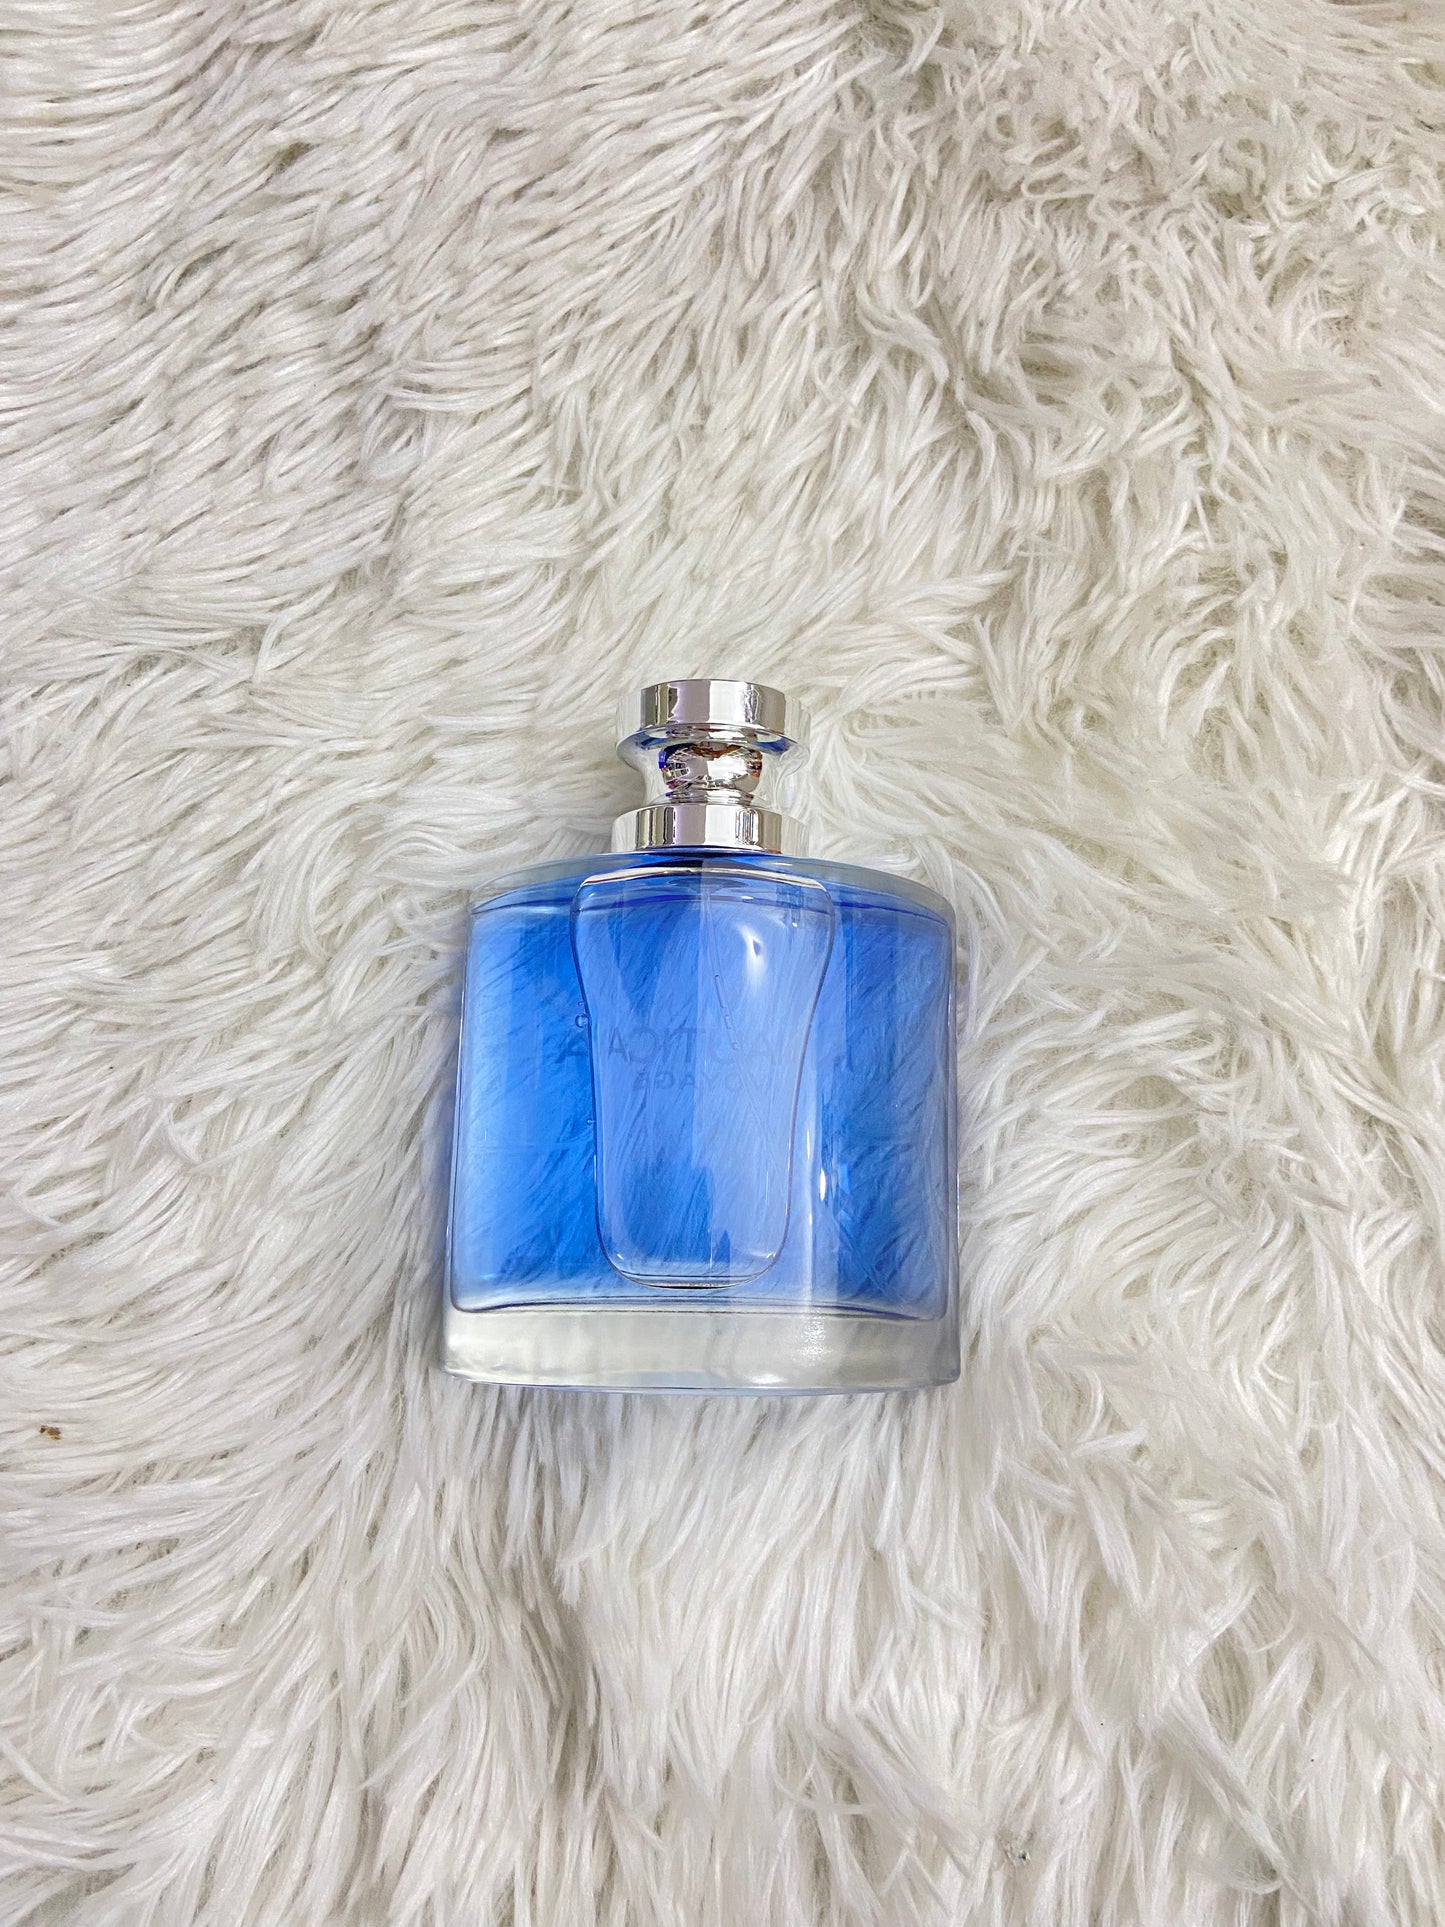 Perfume Nautica original Voyage azul.